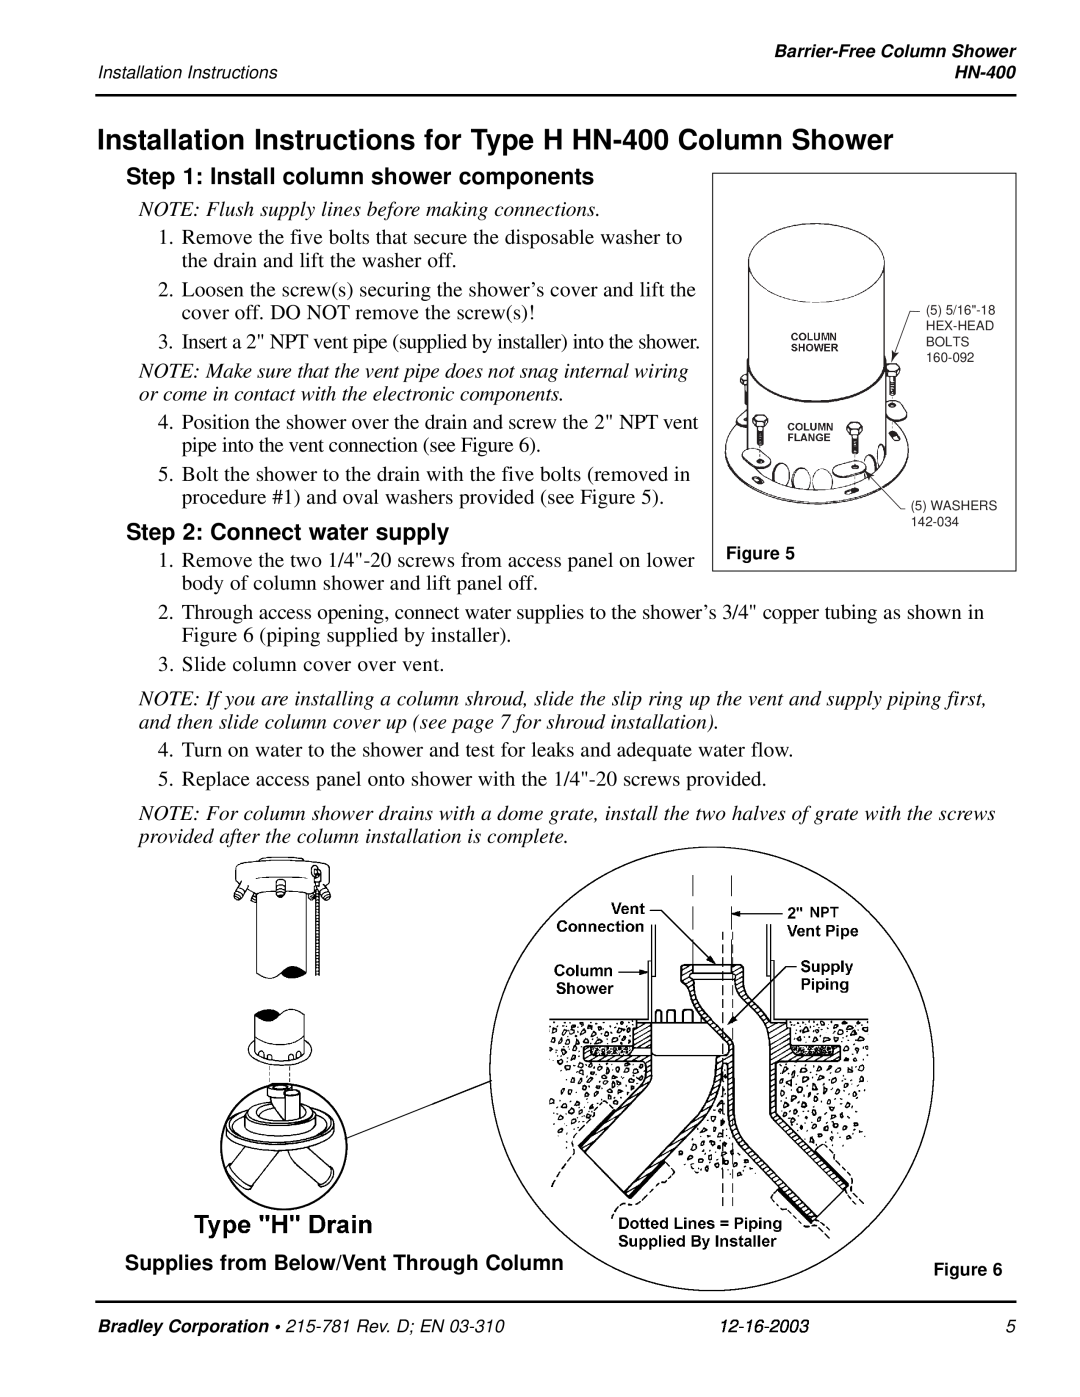 Bradley Smoker HN-400 Supplies from Below/Vent Through Column, Install column shower components, Connect water supply 